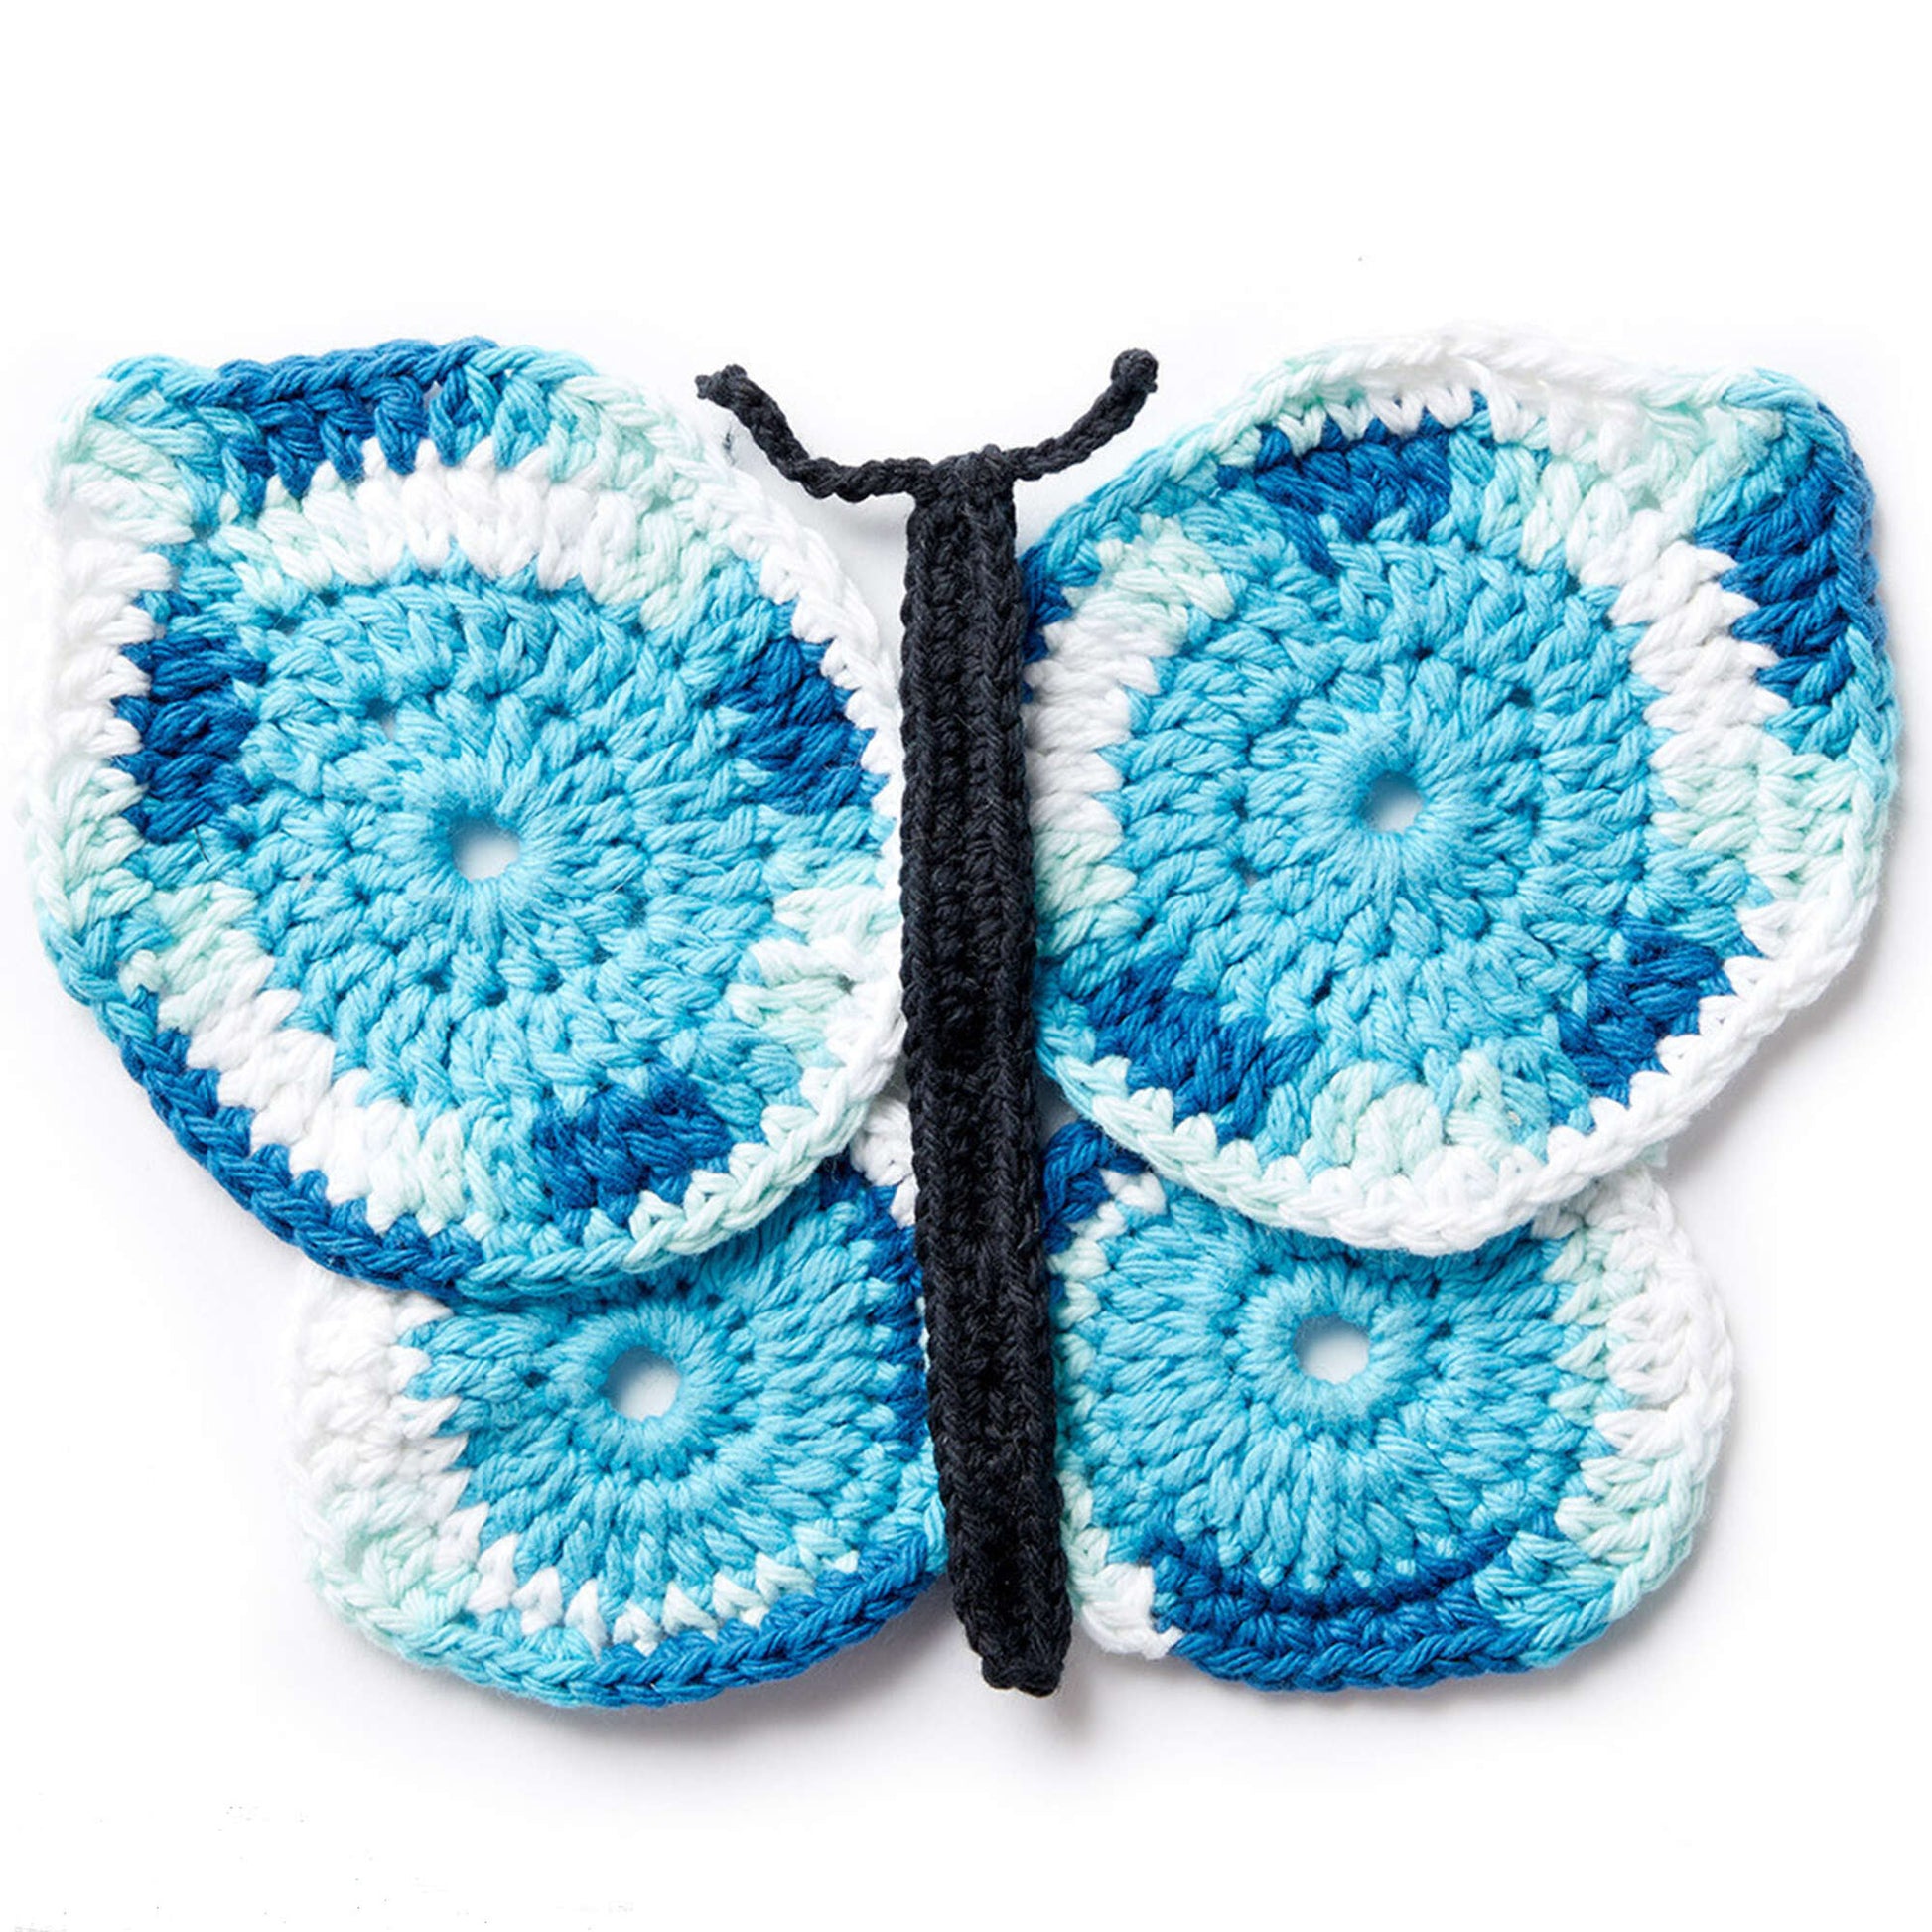 Lily Sugar'n Cream Butterfly Crochet Dishcloth Single Size